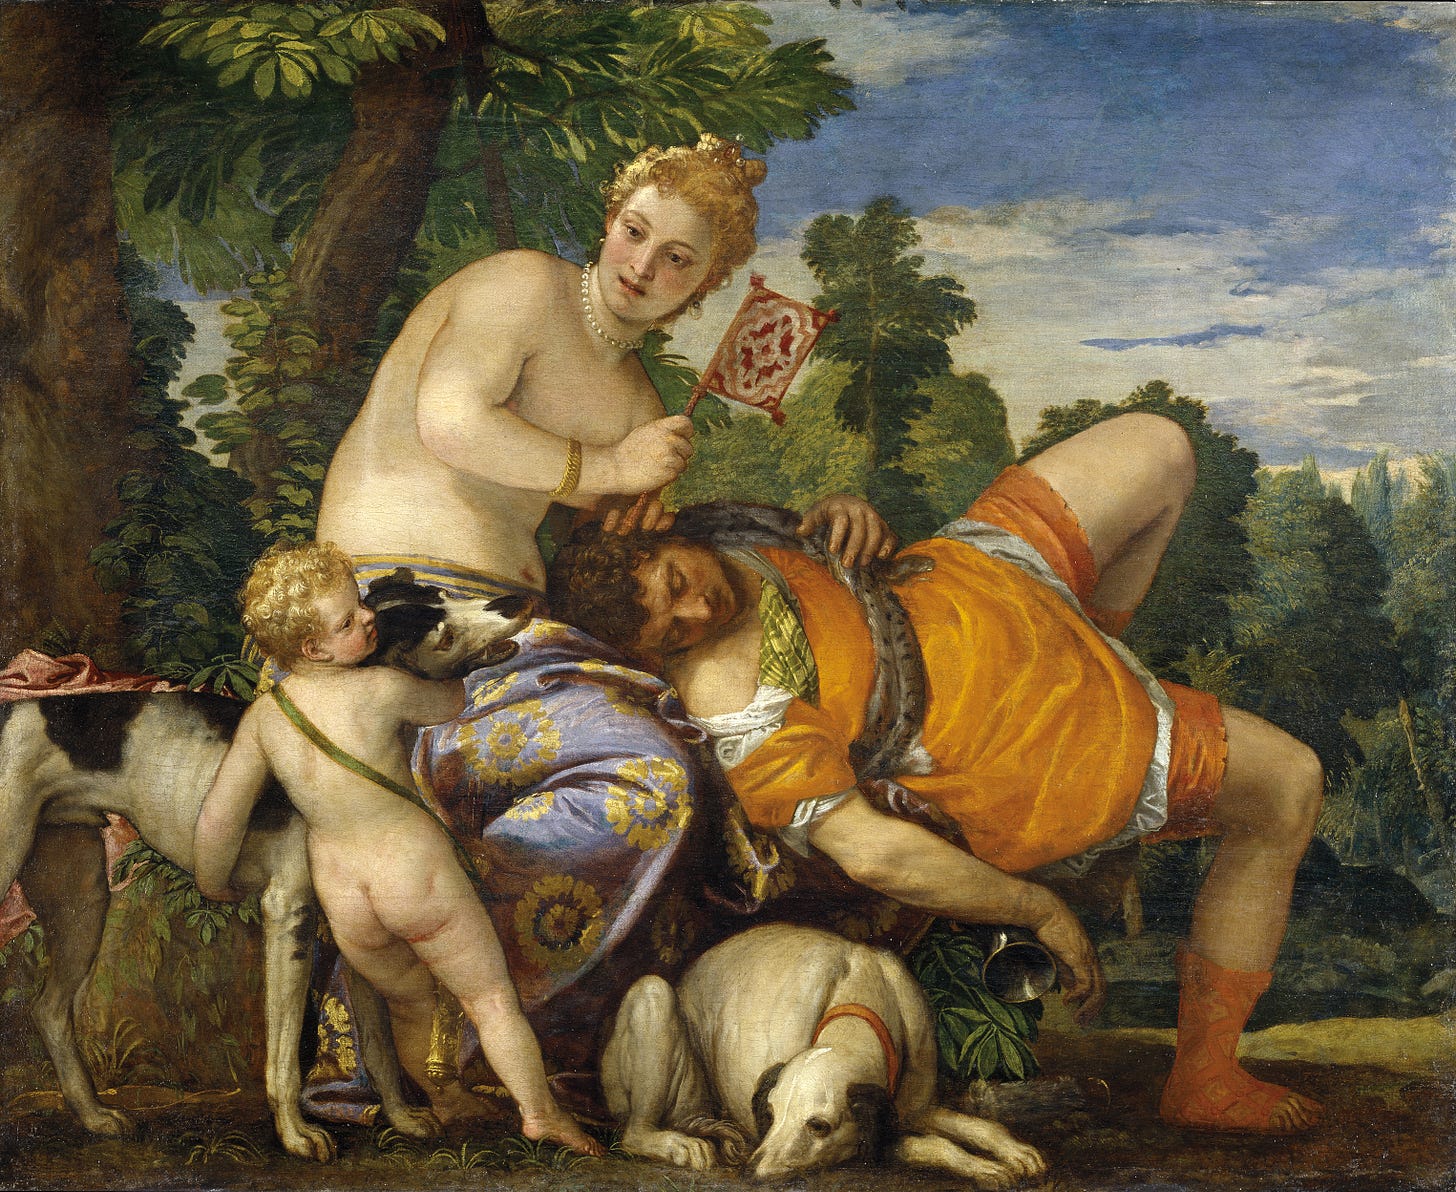 Venus and Adonis (Veronese, Madrid) - Wikipedia